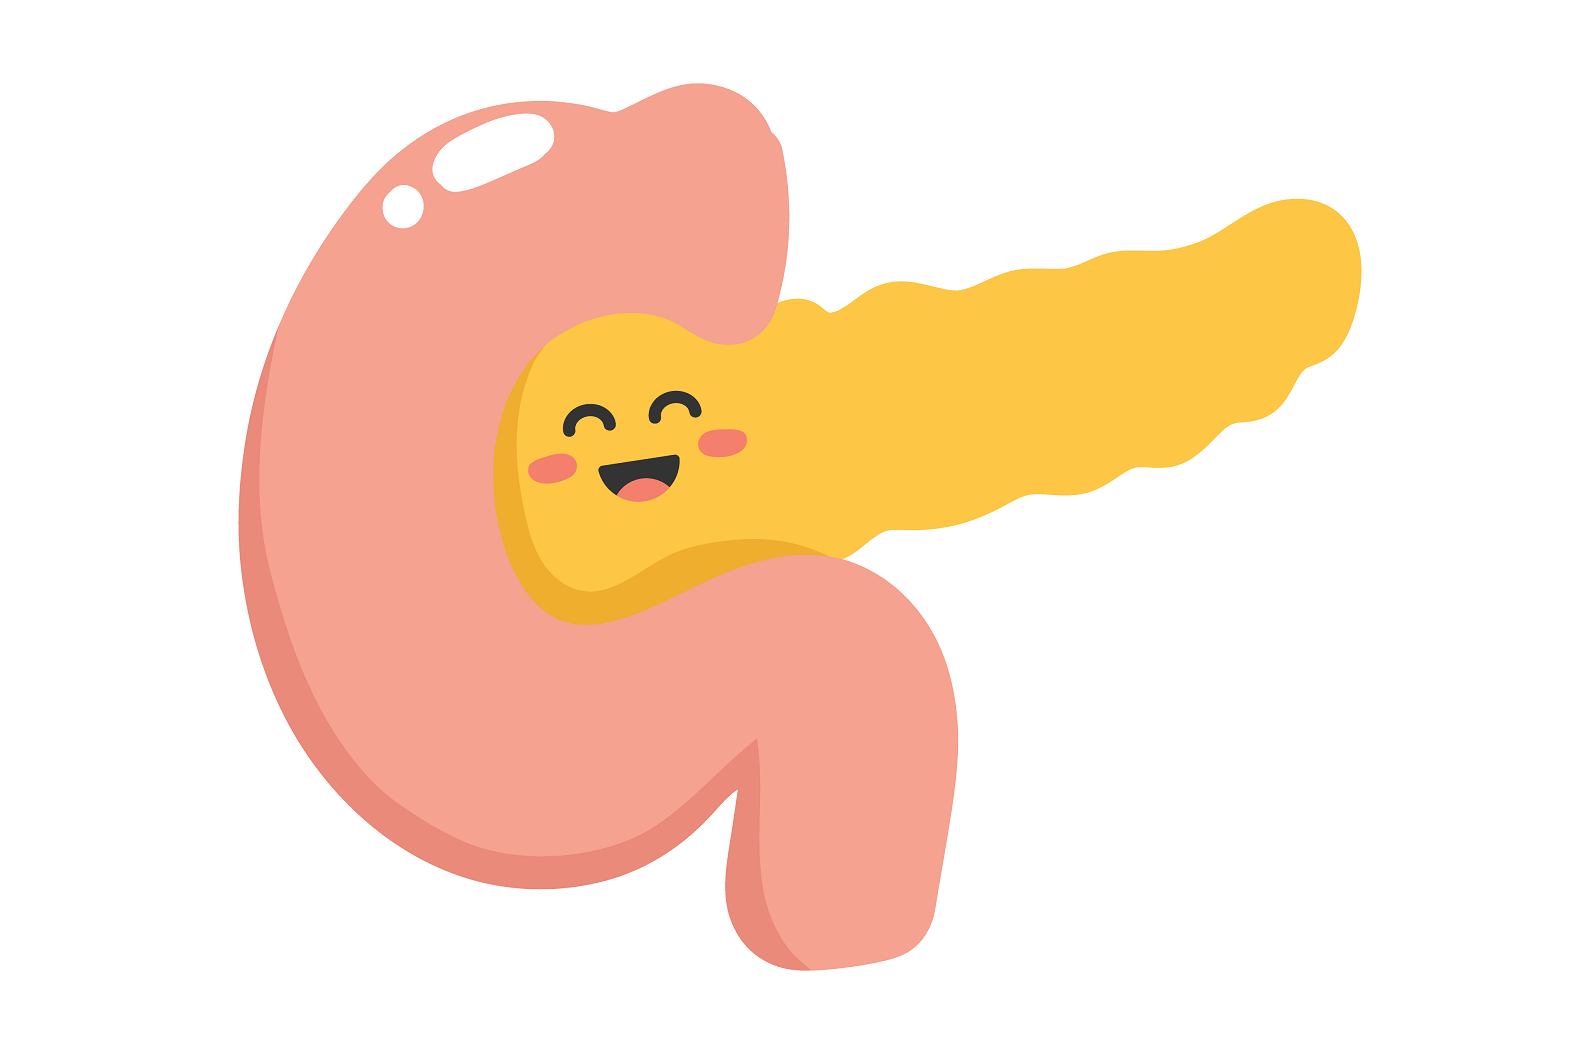 A cartoon illustration of a pancreas